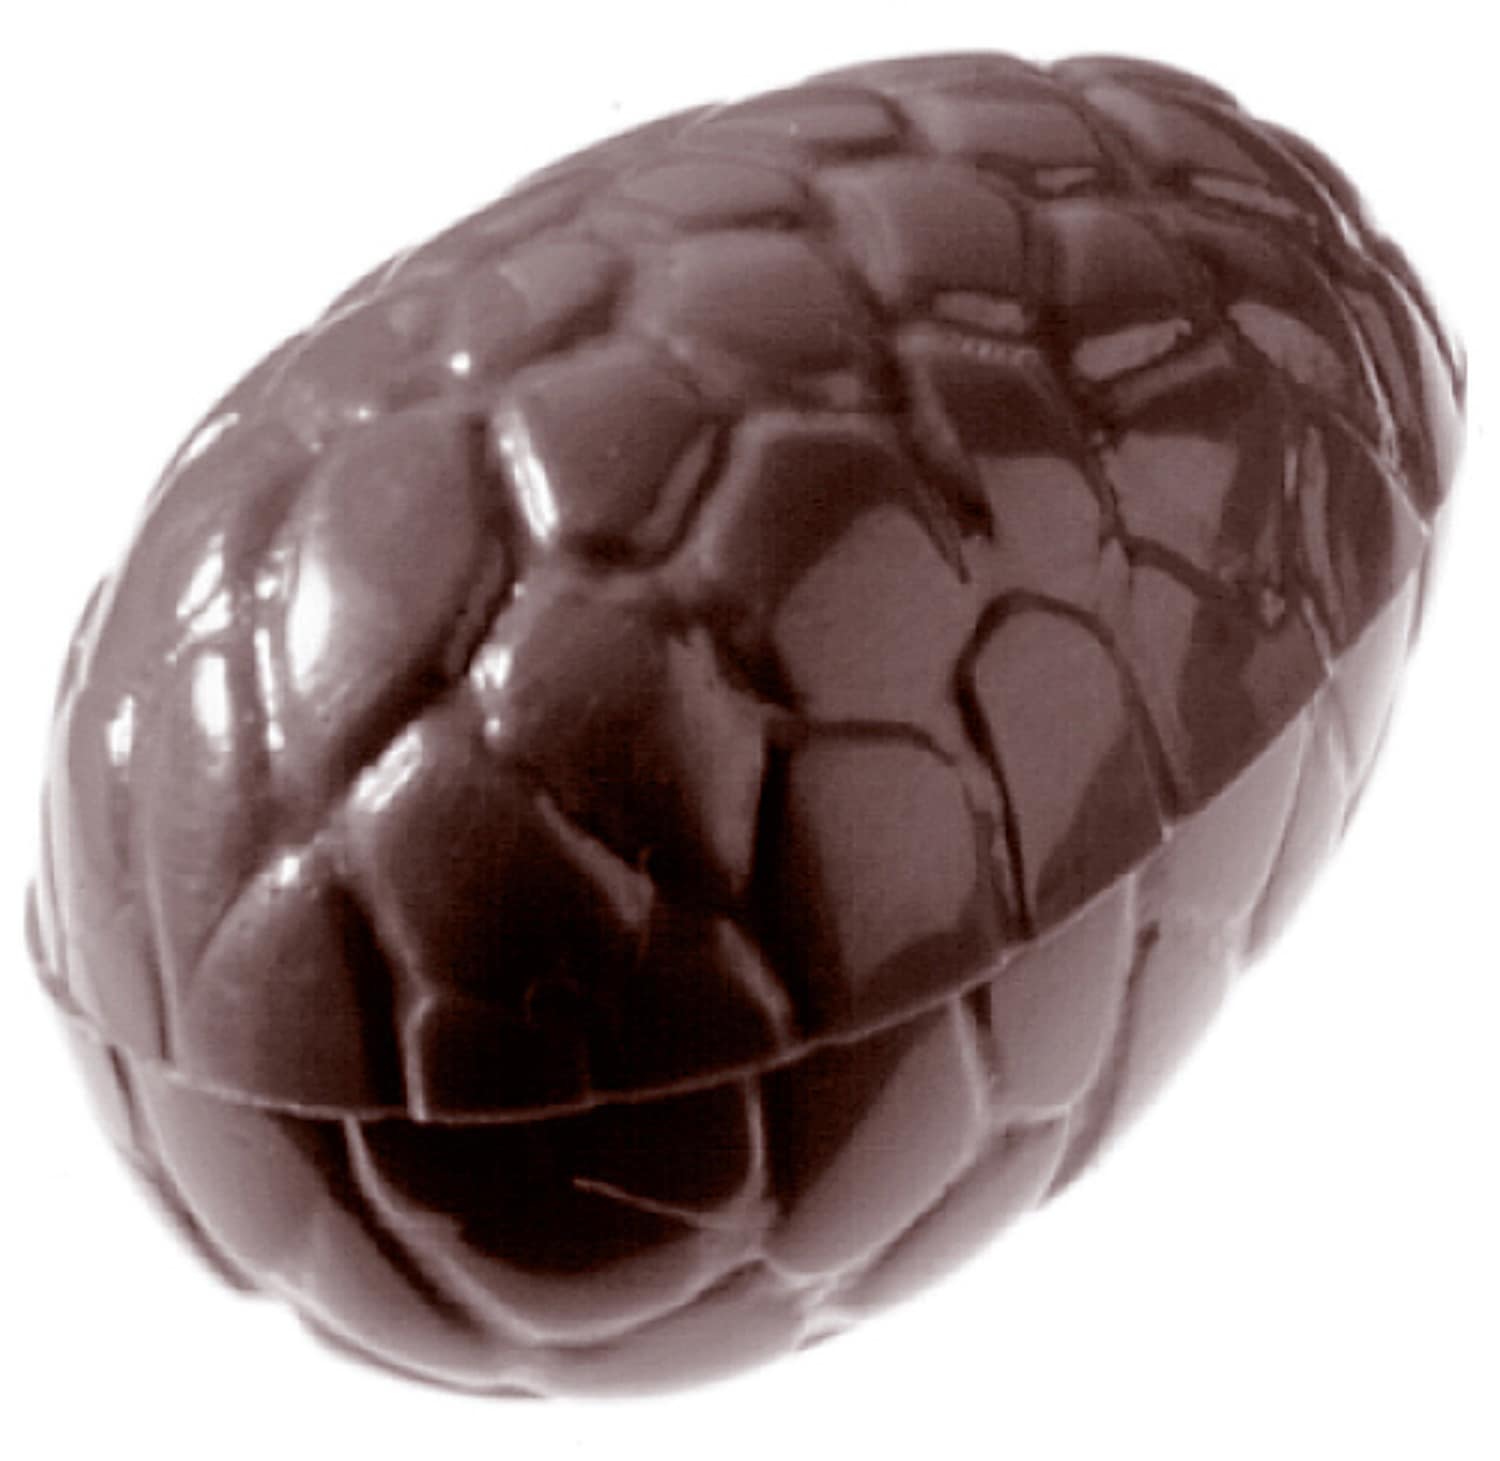 Schokoladenform "Osterei" 421266